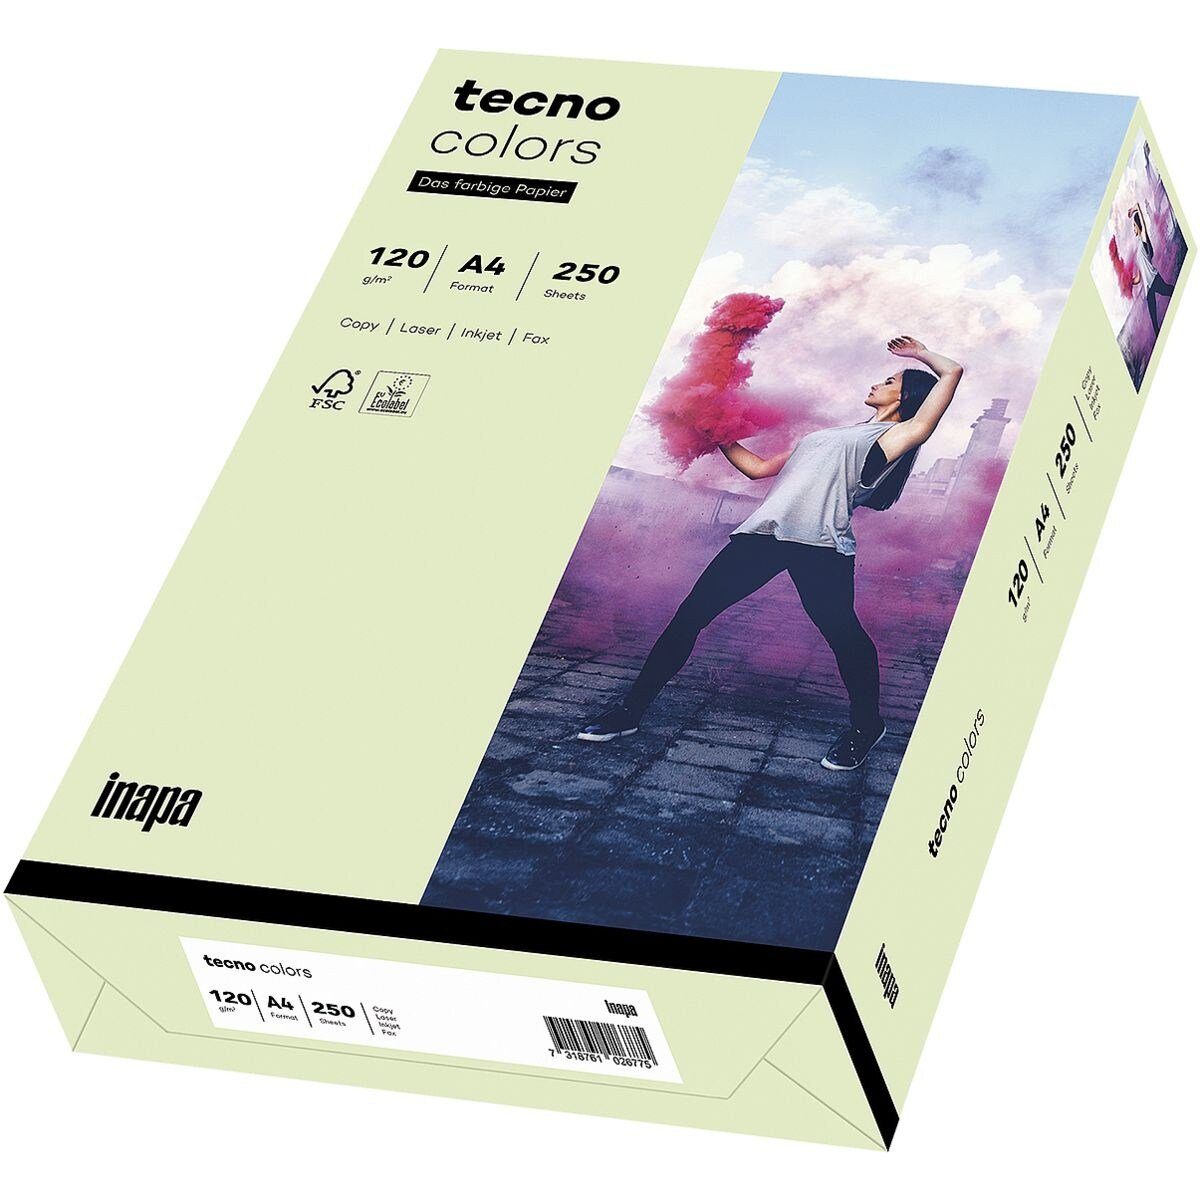 Inapa tecno Drucker- und Kopierpapier Rainbow / tecno Colors, Pastellfarben, Format DIN A4, 120 g/m², 250 Blatt hellgrün | Laserpapier